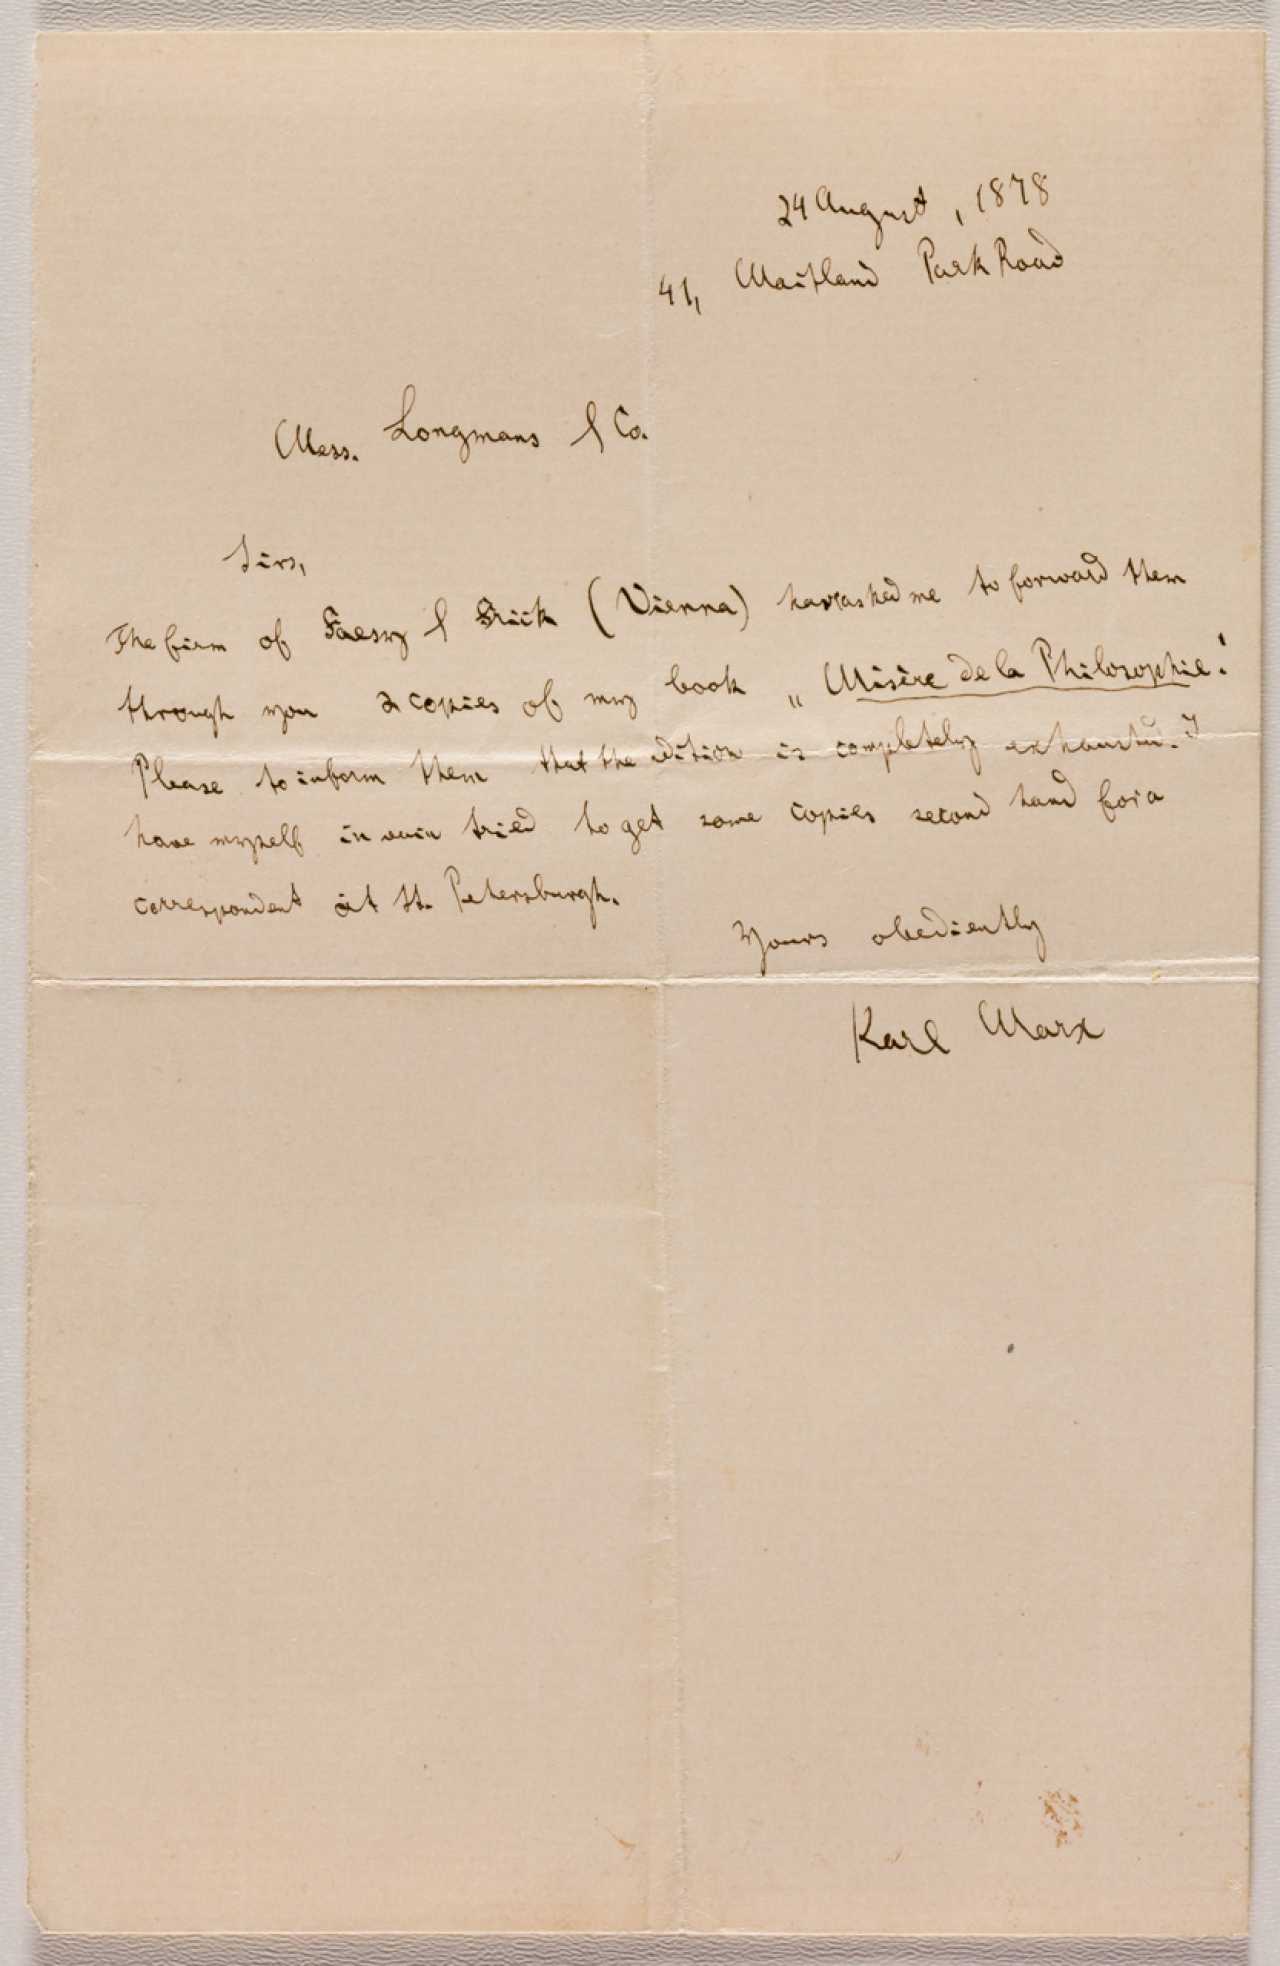 20-й аукцион Galerie Moenius AG. Лот 71 — Письмо Карла Маркса от 28 августа 1878 года